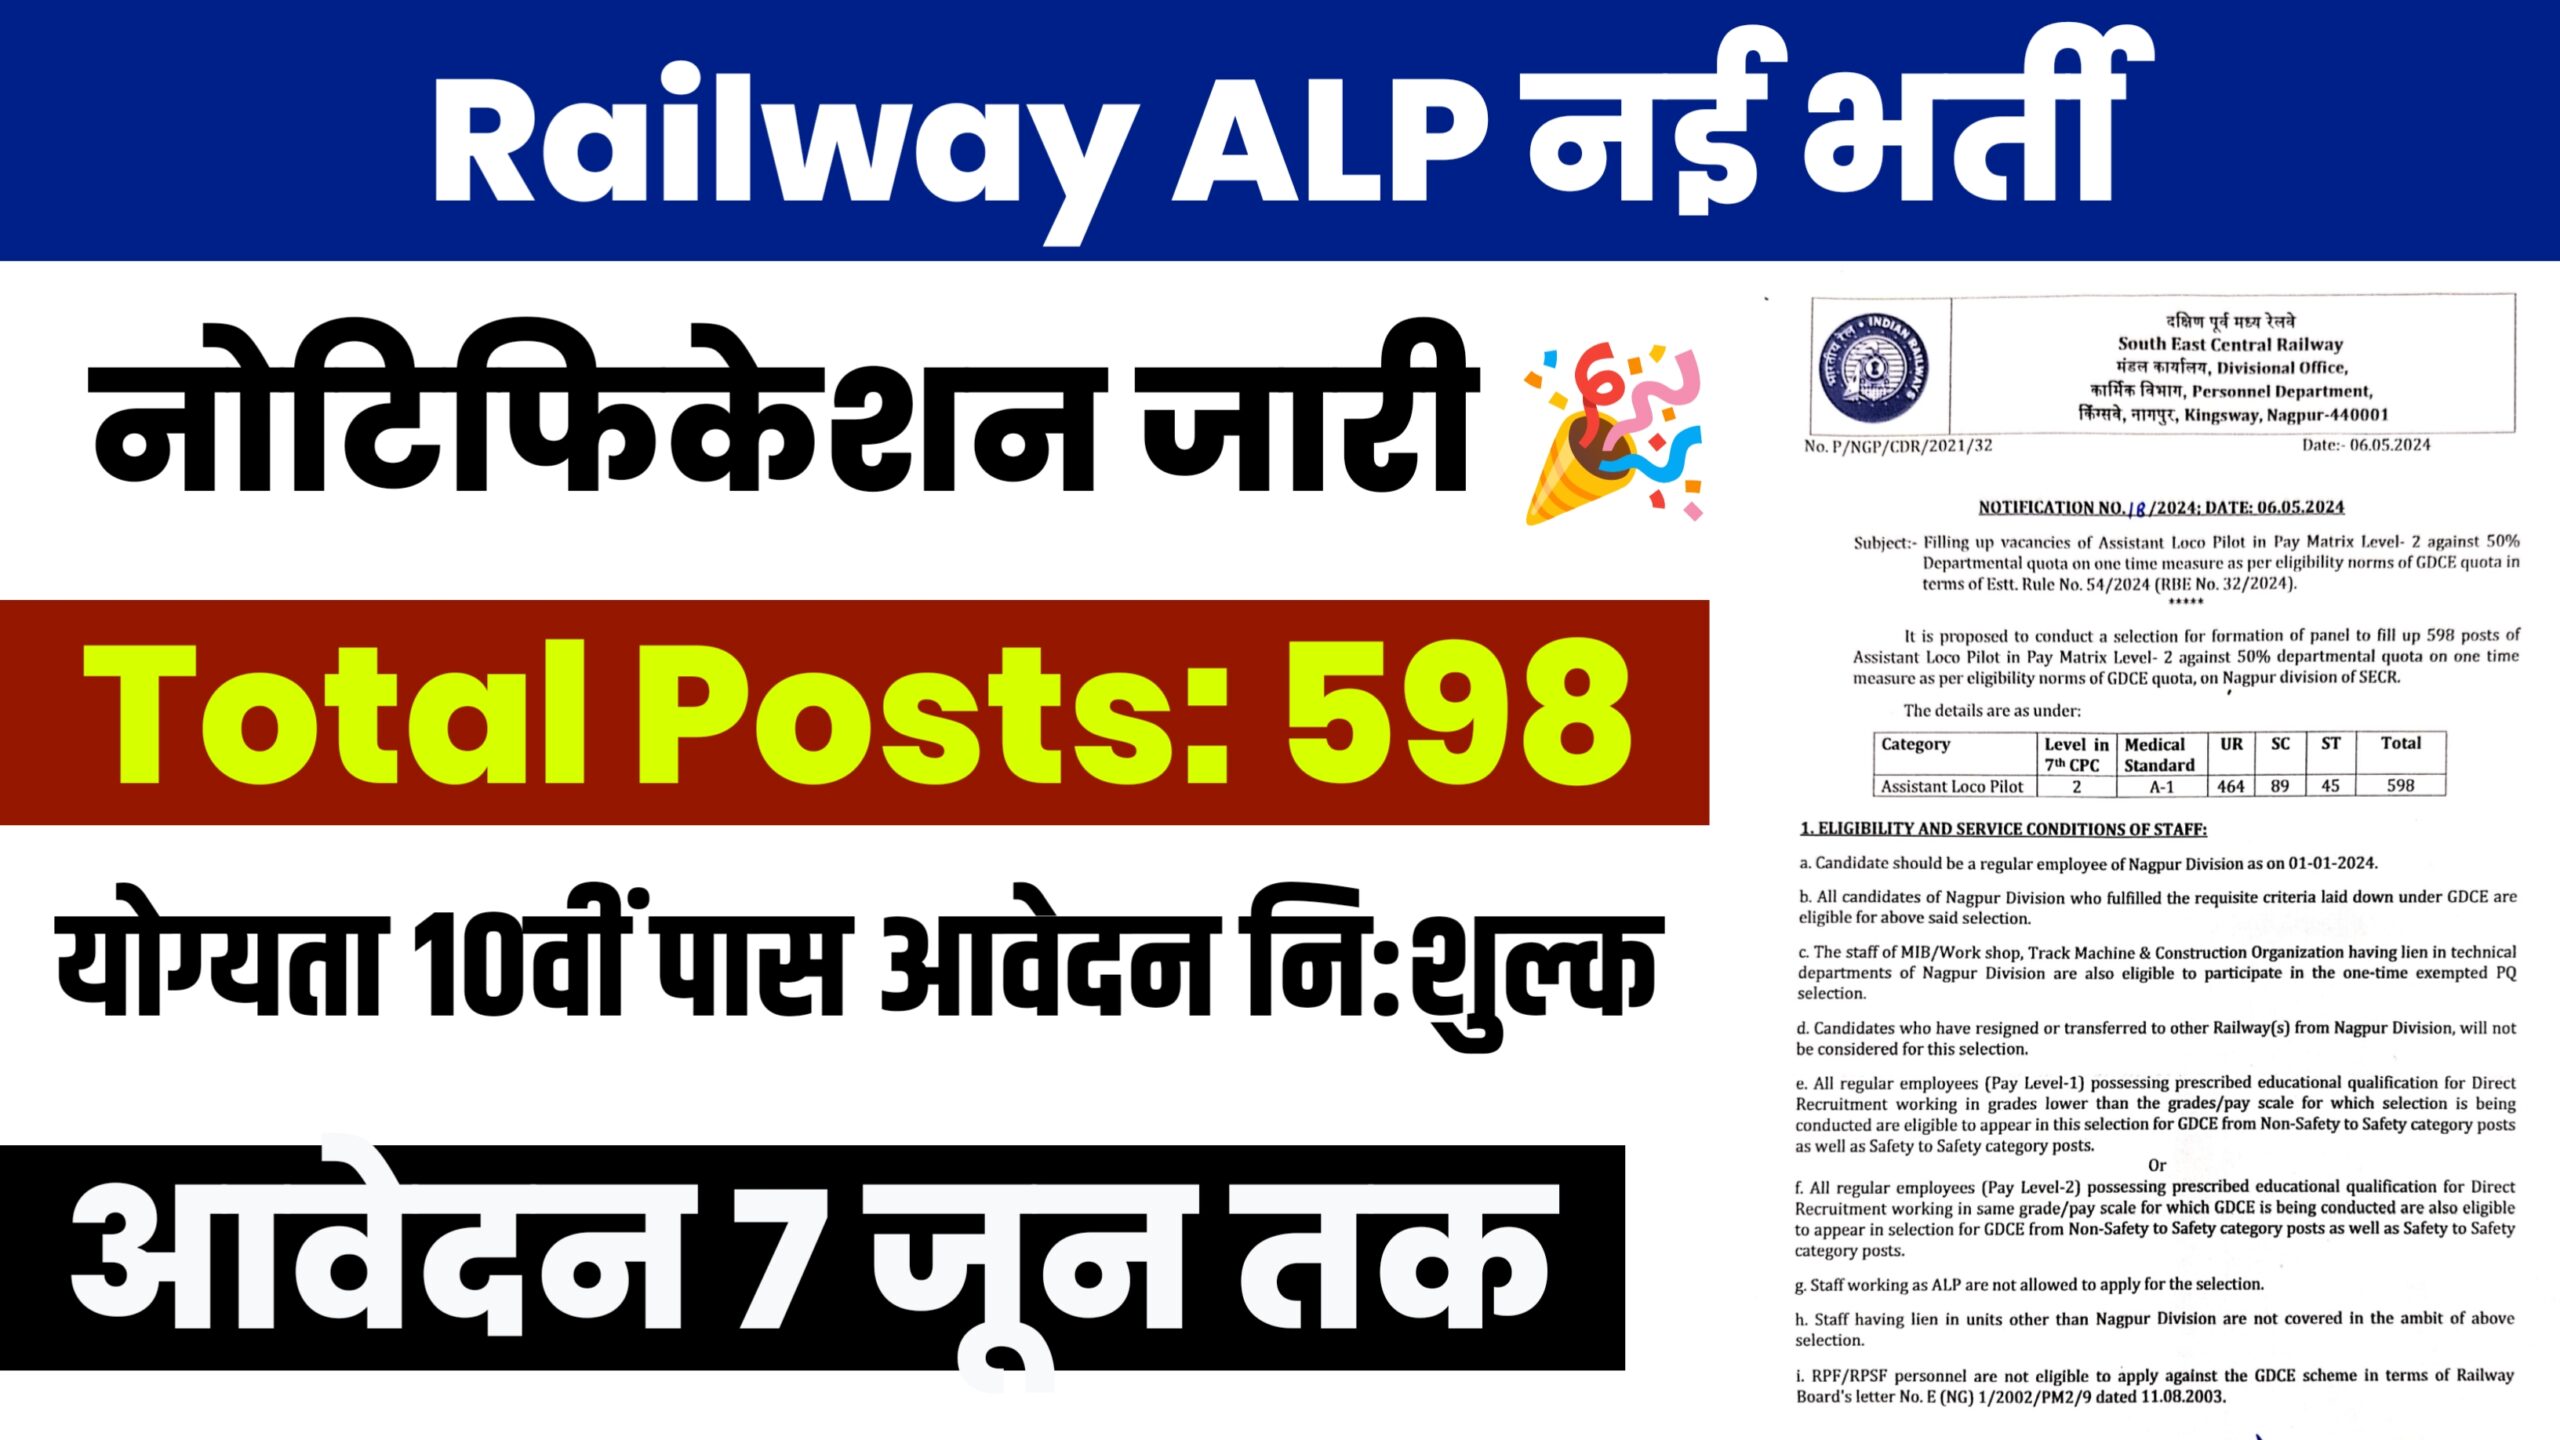 Railway ALP Vacancy